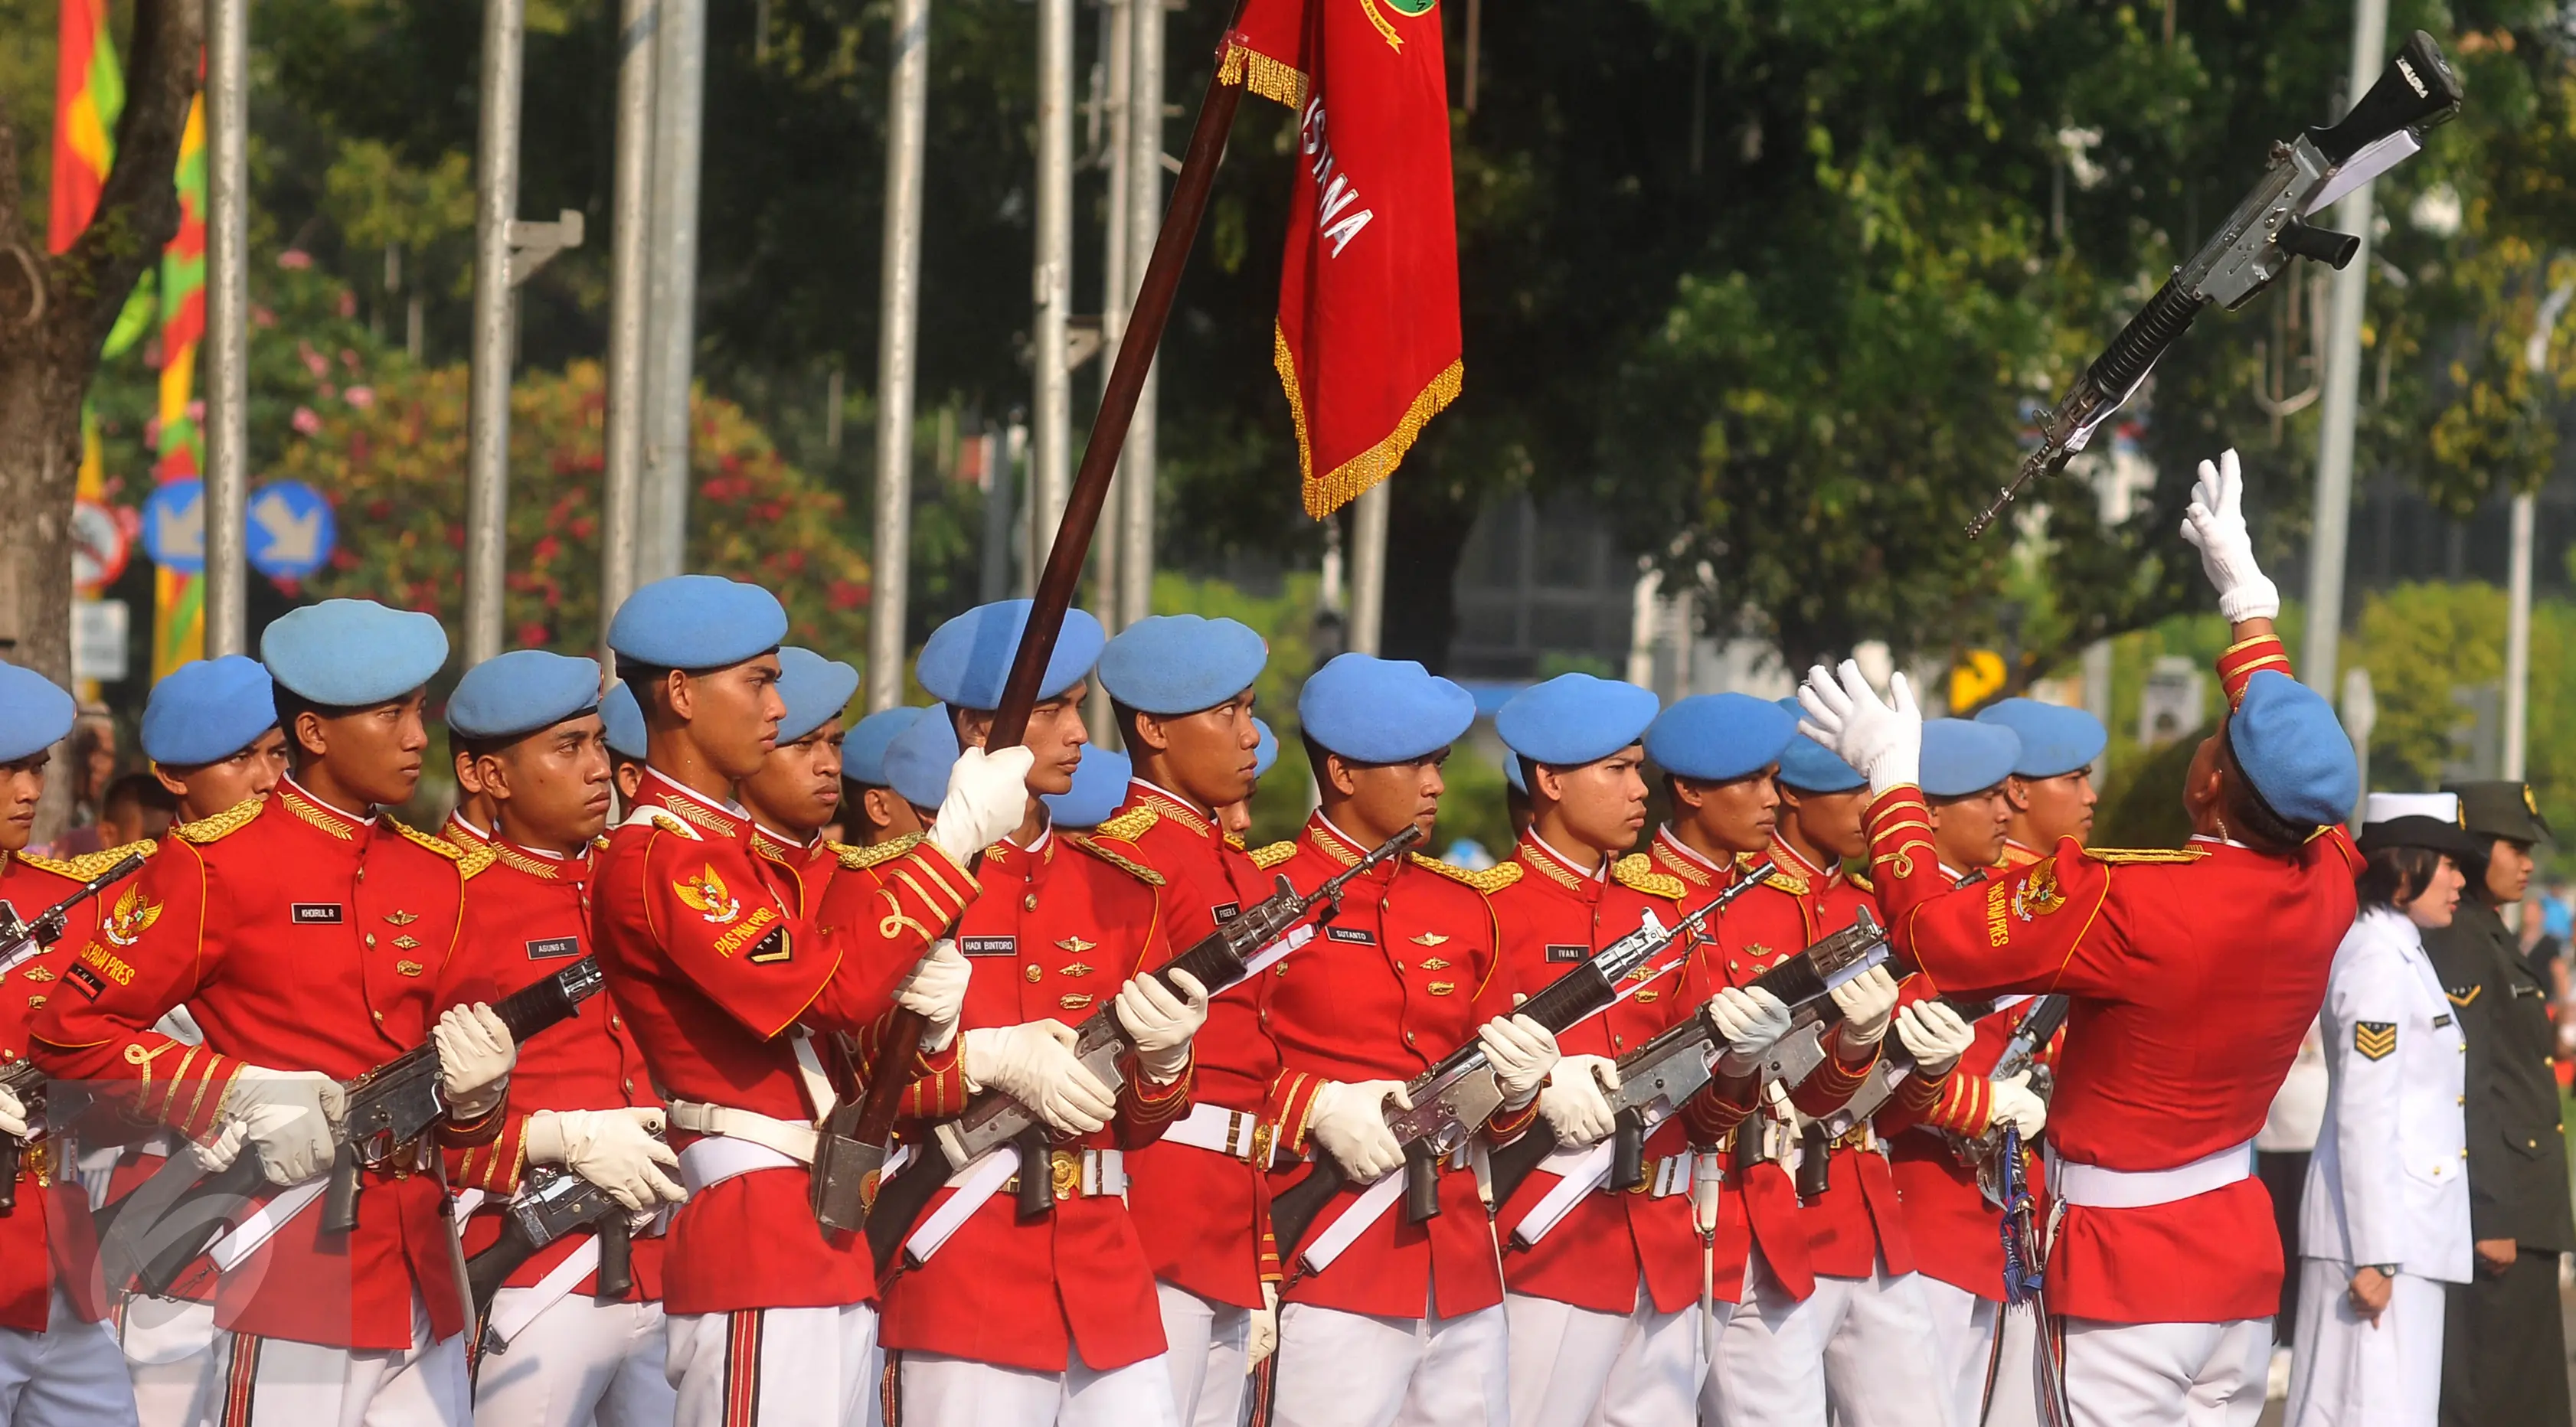 Paspampres melakukan prosesi serah terima pergantian pasukan jaga Istana di depan Istana Negara, Jakarta, Minggu (17/7). Prosesi ini merupakan kegiatan rutin yang dilangsungkan pada Minggu ke-2 tiap bulannya. (Liputan6.com/Gempur M Surya)